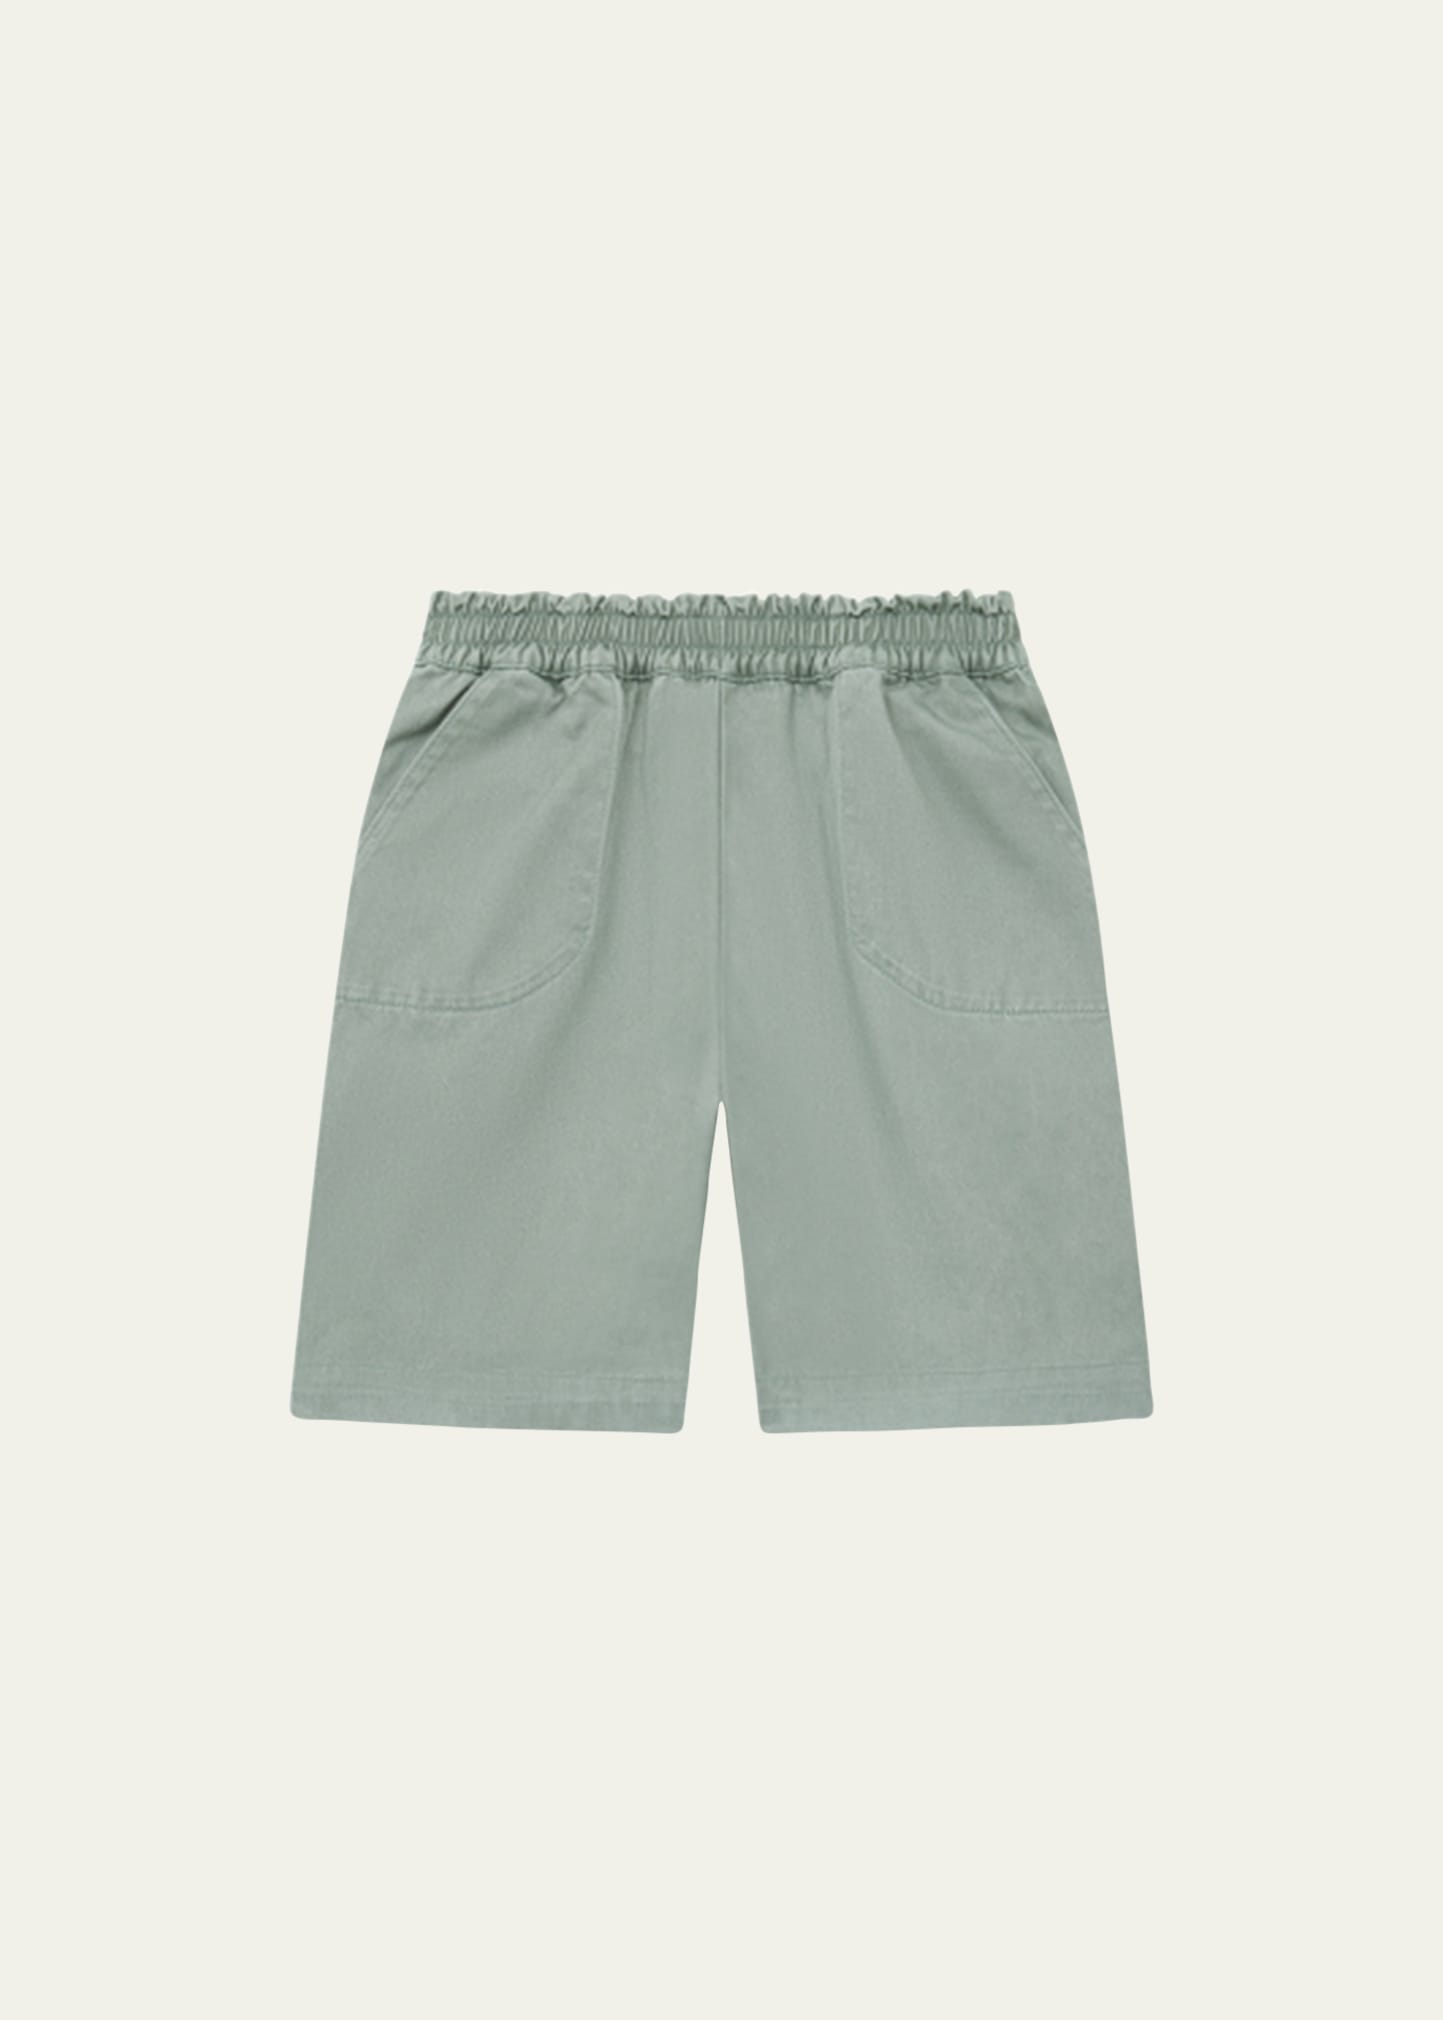 Bonton Girl's Delave Cotton Denim Shorts, Size 4-12